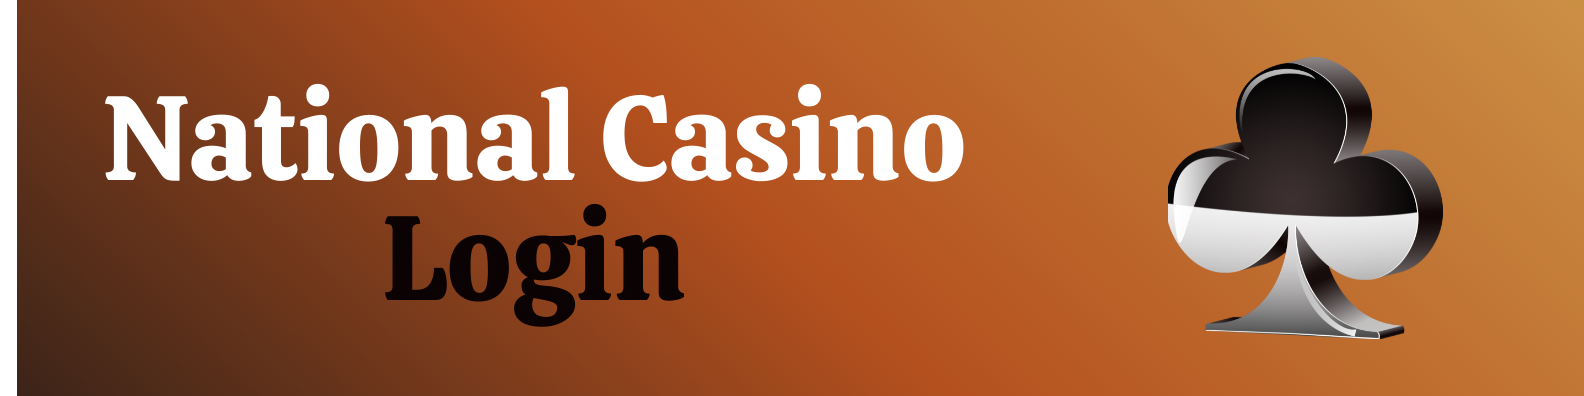 National Casino Login